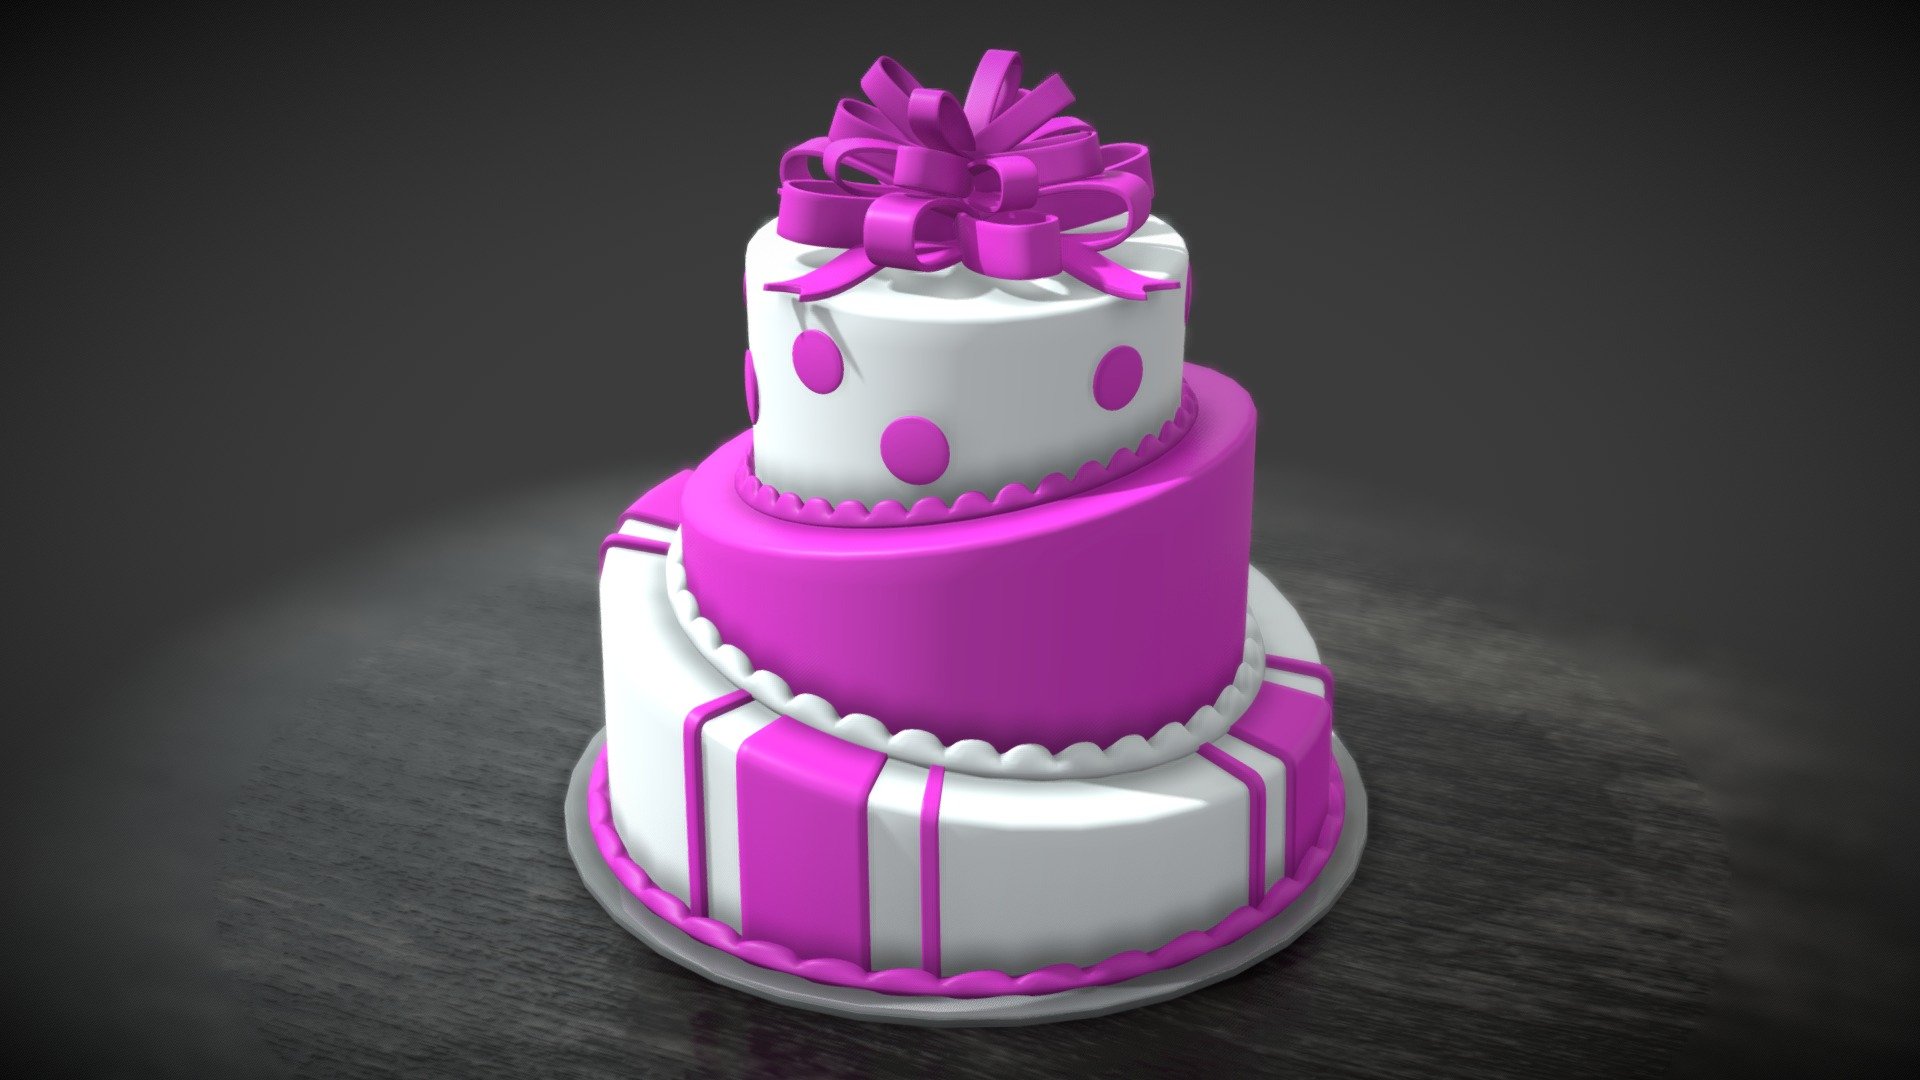 Birthday Cake by Max ⚡️ Osichka on Dribbble